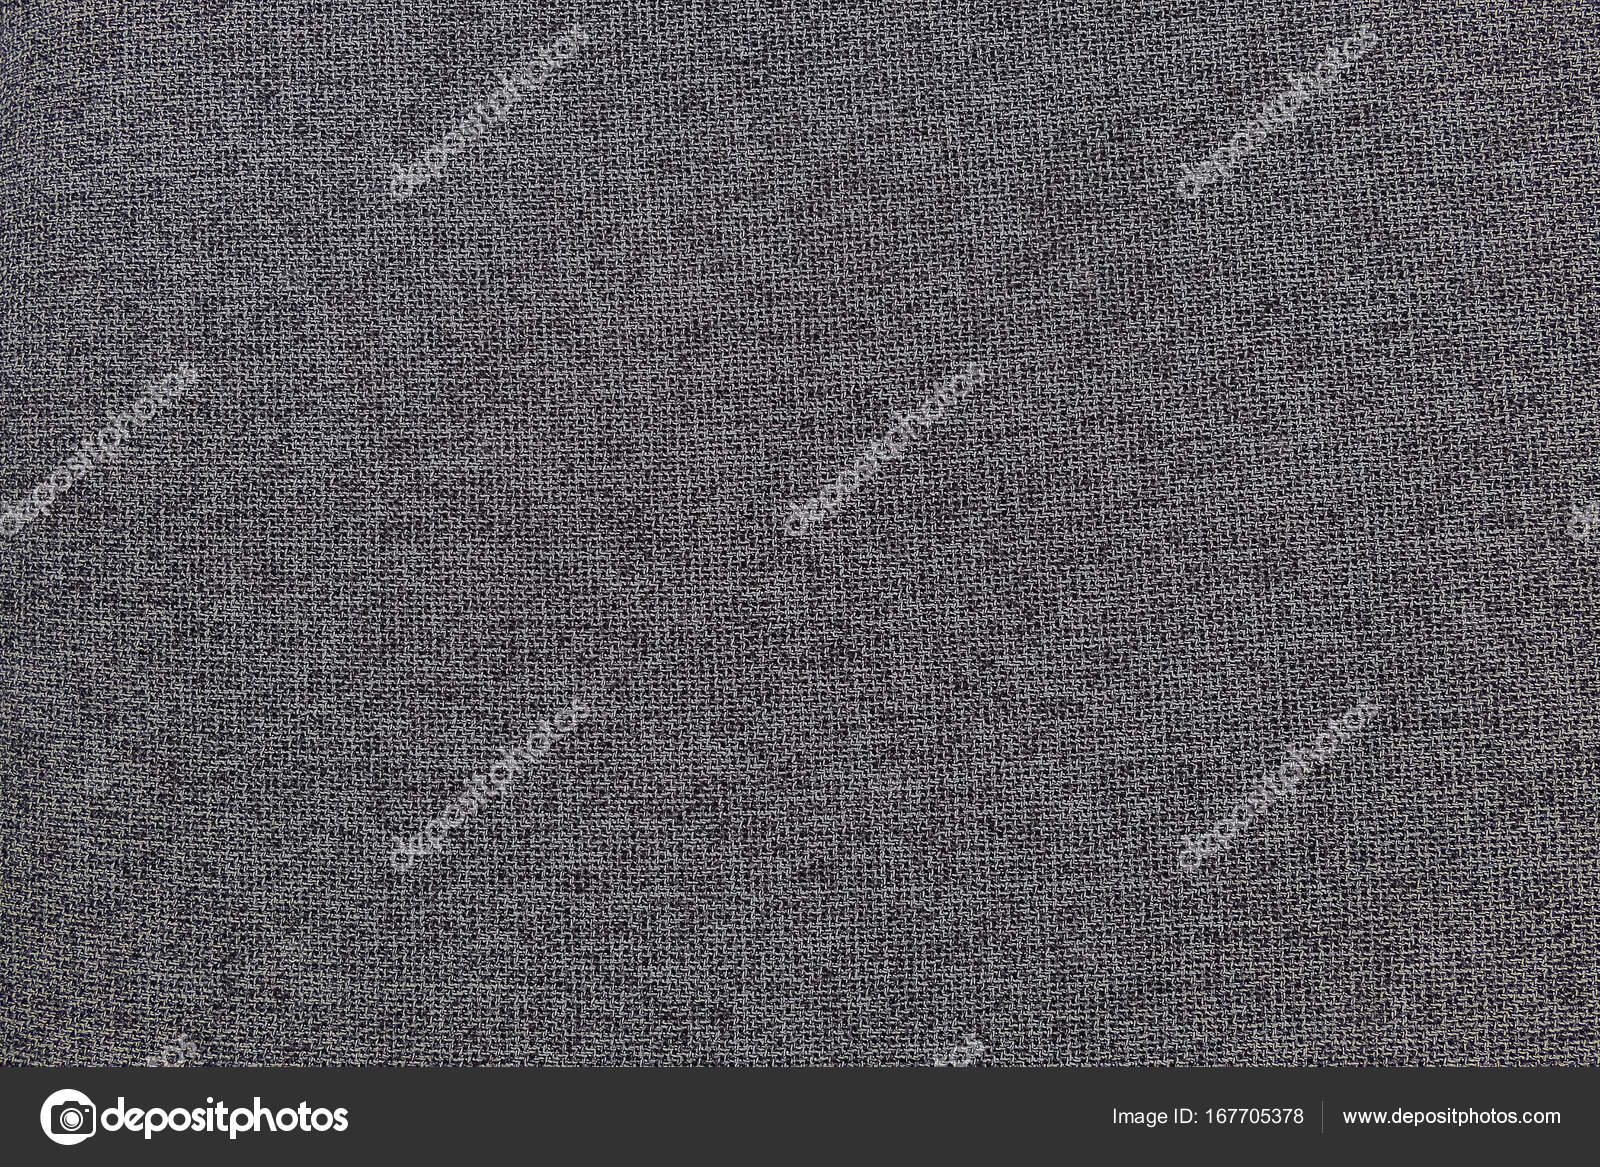 Gray fabric netting background, texture, — Stock Photo © pookpiik #167705378